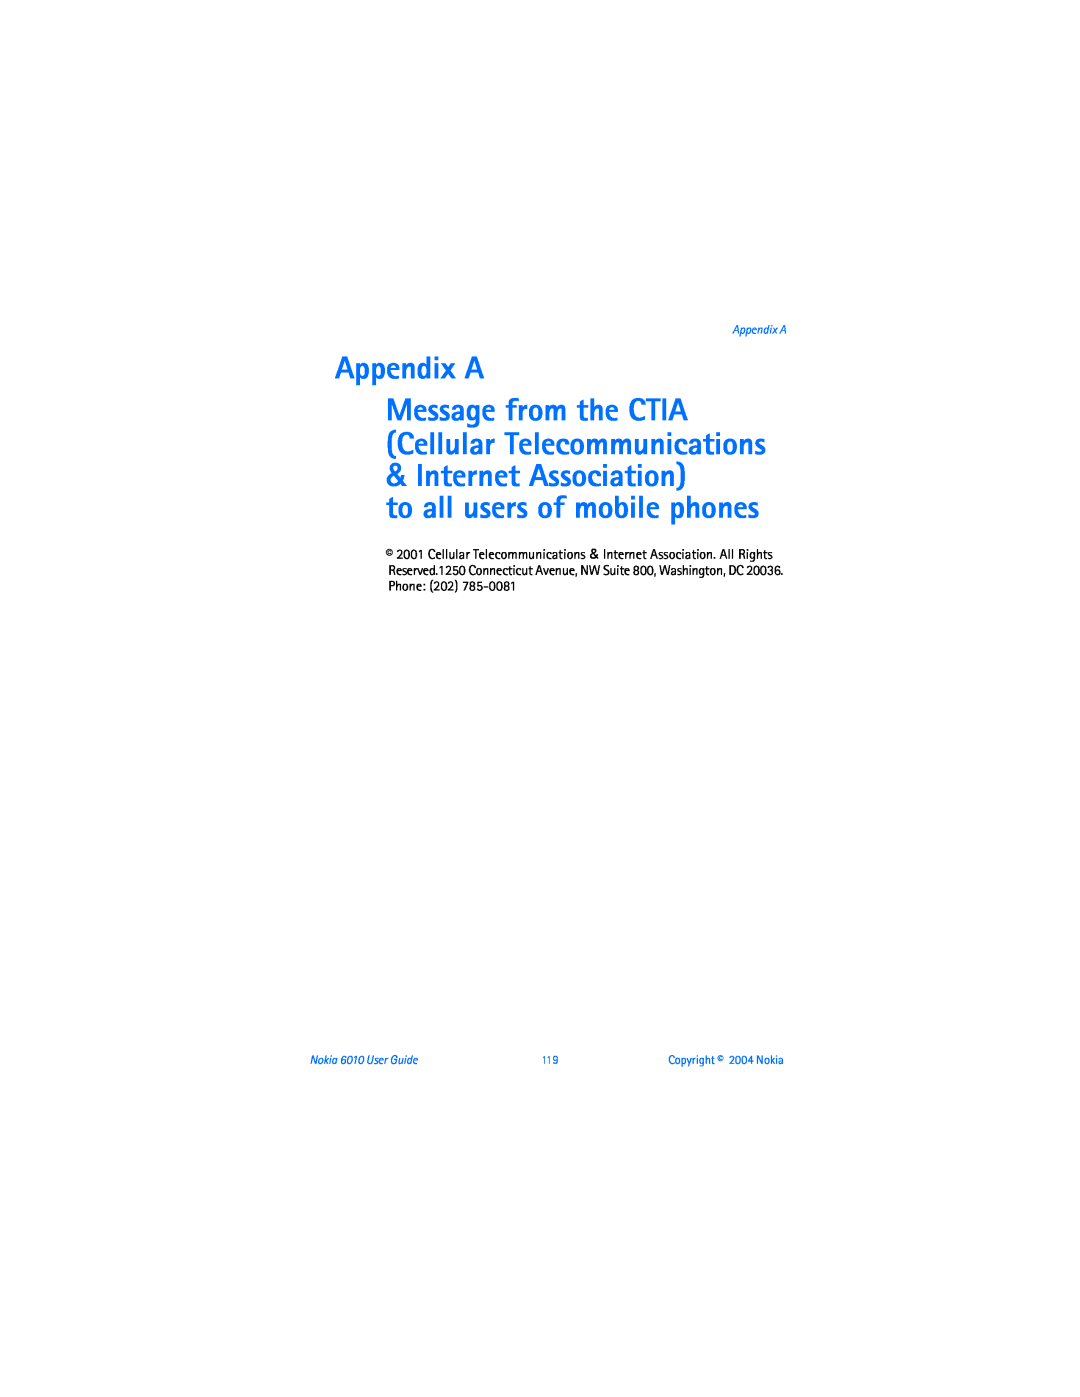 Nokia warranty Appendix A Message from the CTIA Cellular Telecommunications, Nokia 6010 User Guide, Copyright 2004 Nokia 